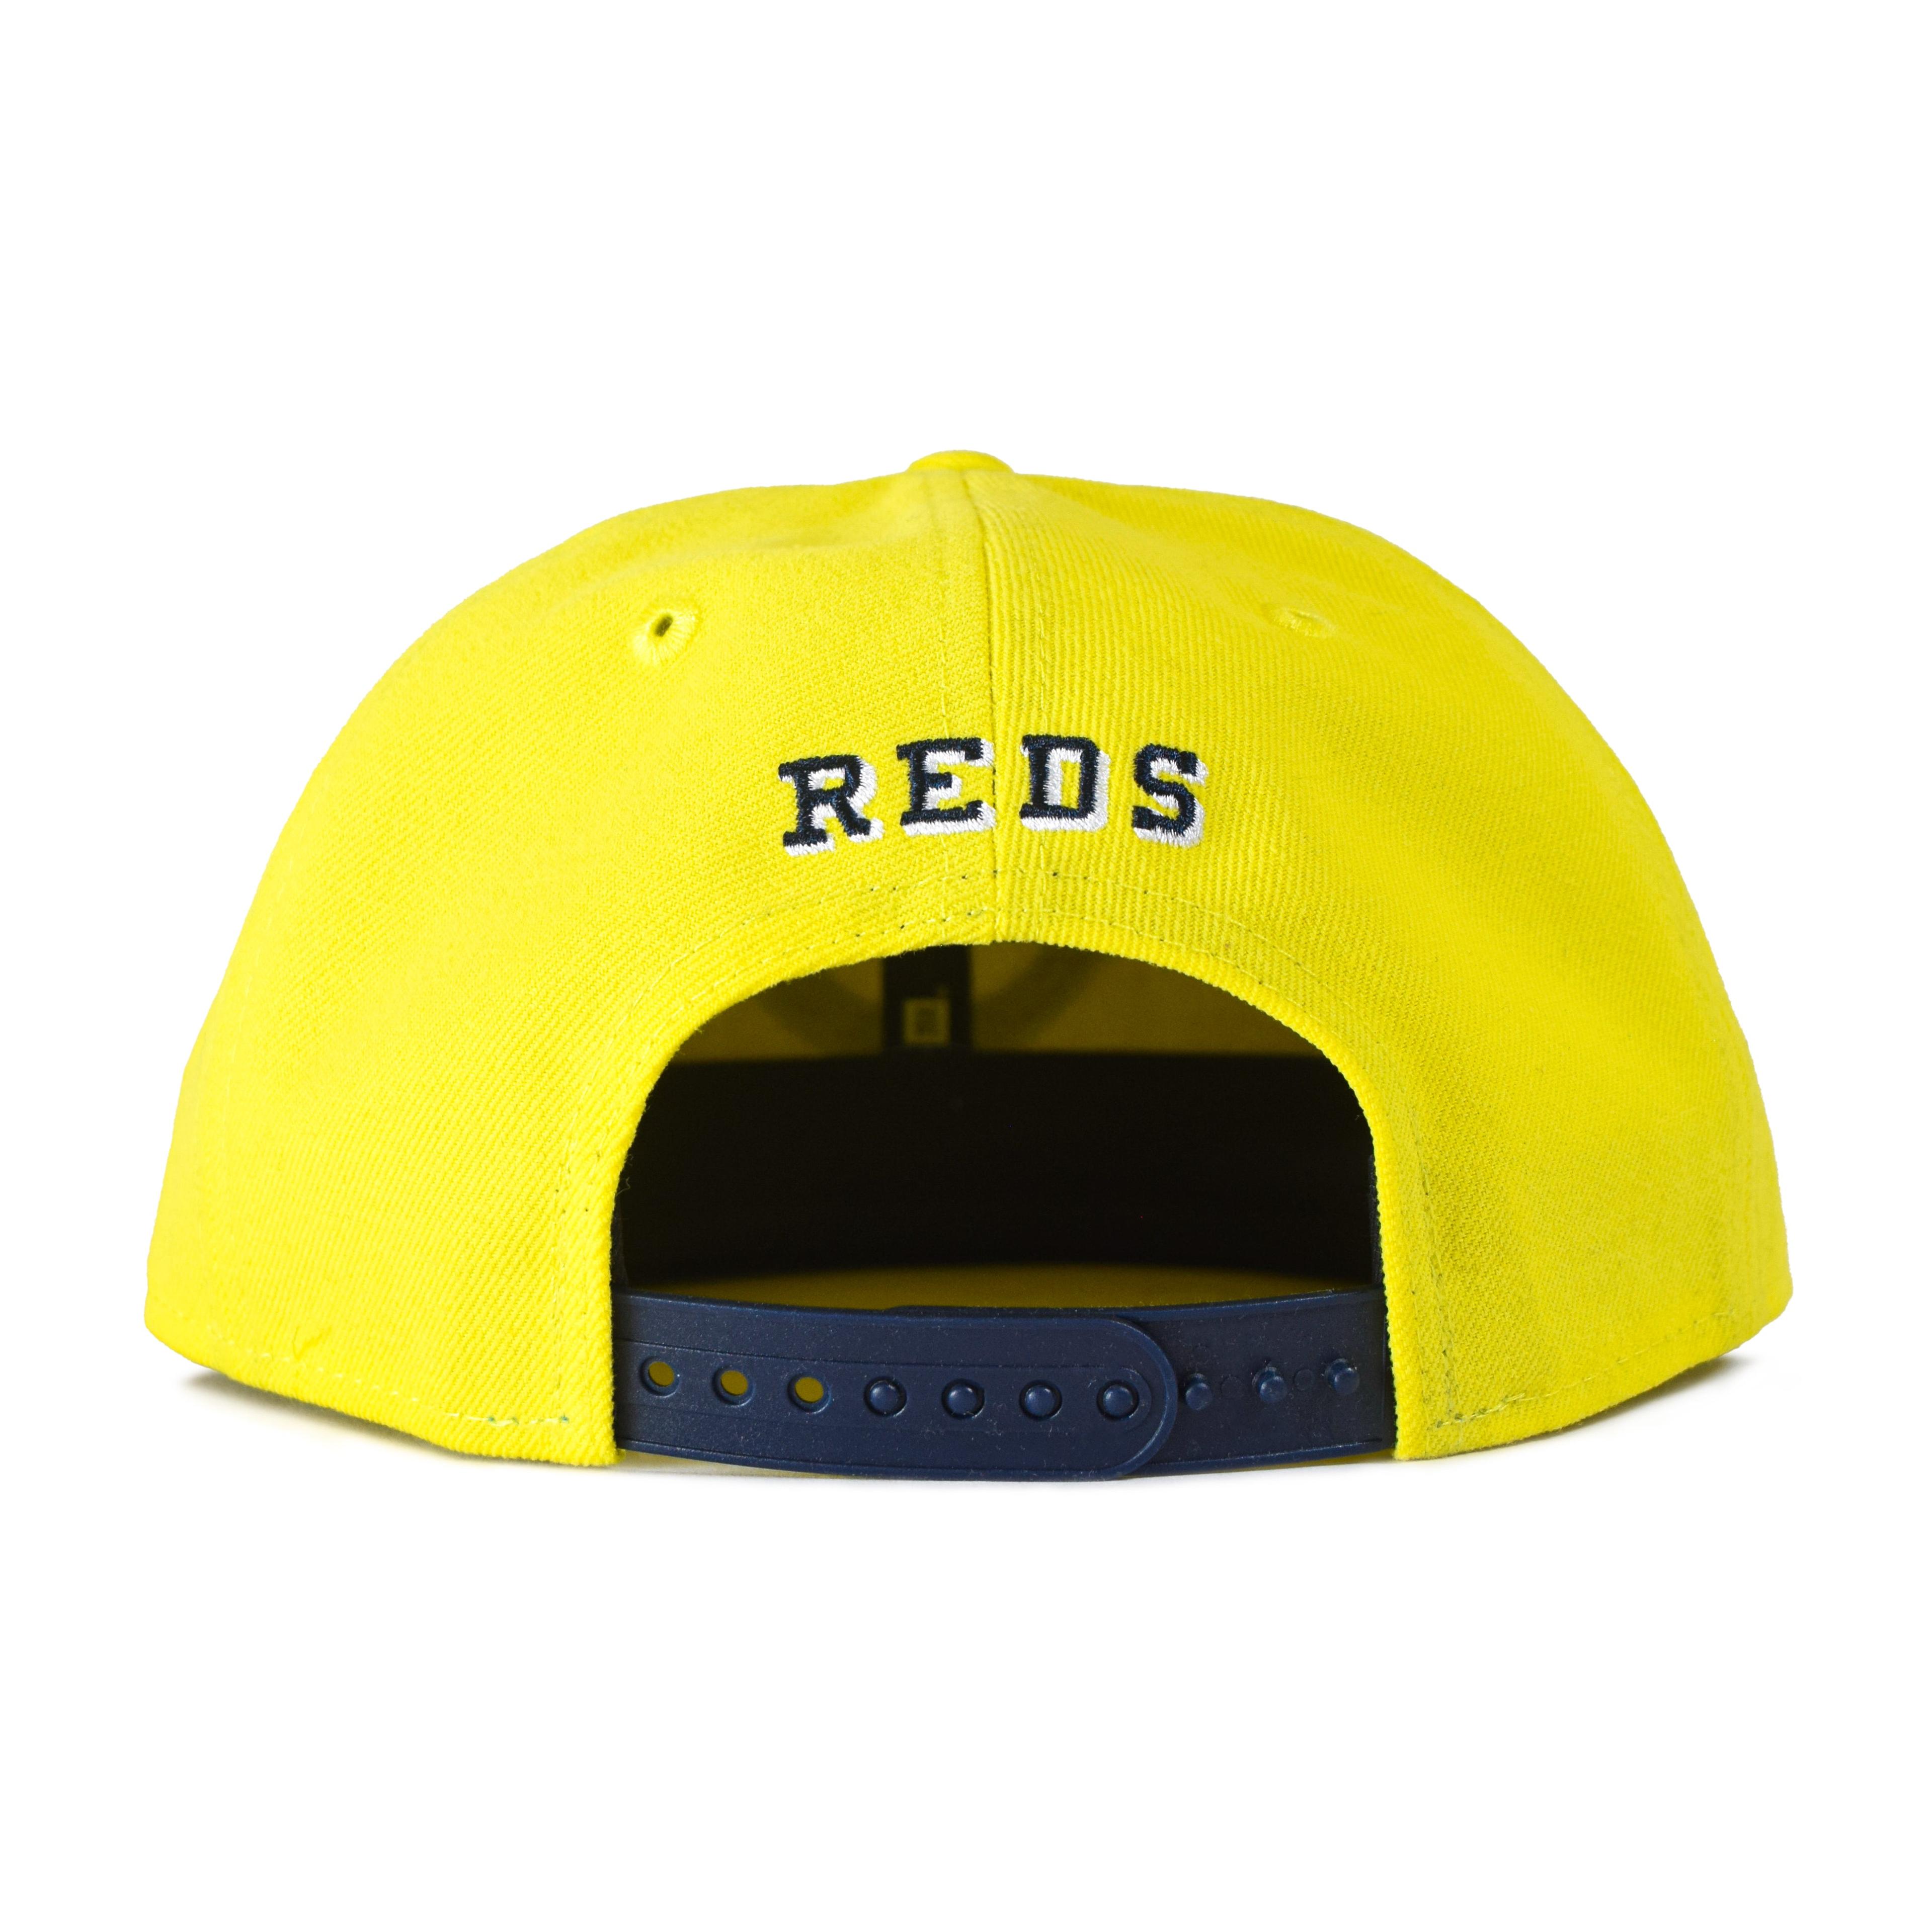 Alternate View 2 of New Era Cincinnati Reds 9Fifty Snapback - Yellow/Navy